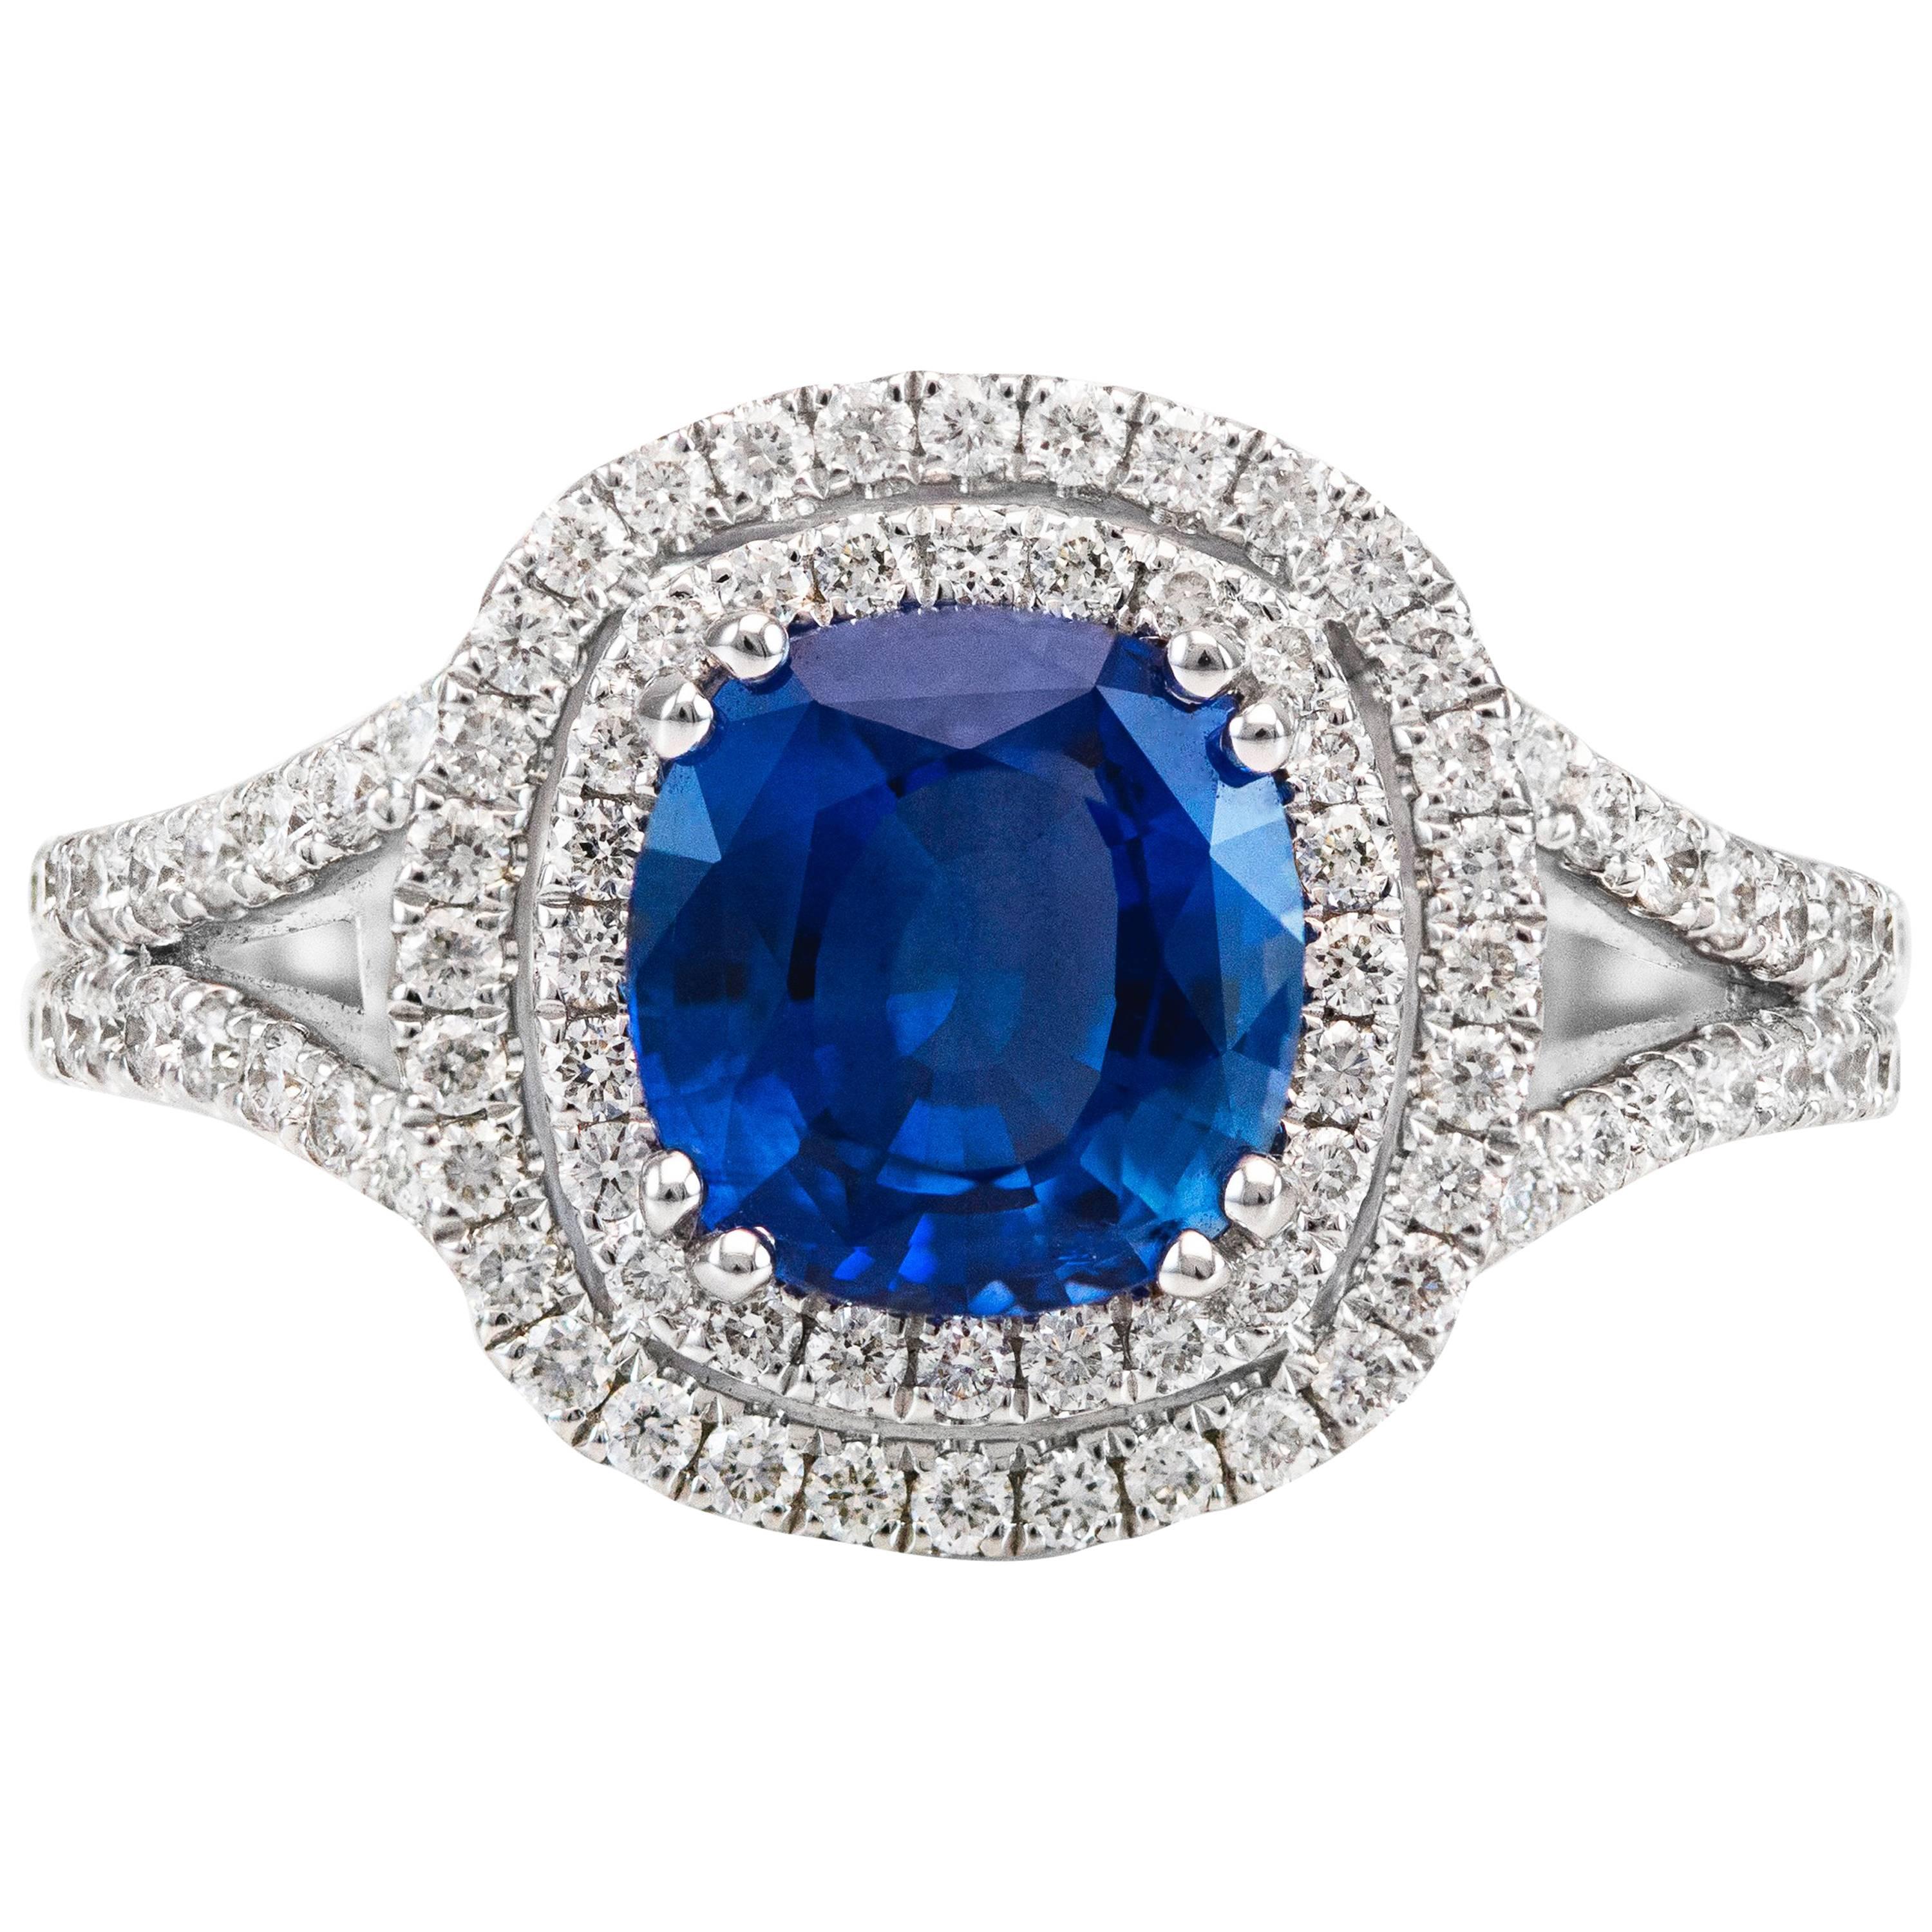 Roman Malakov 2.06 Carats Cushion Cut Blue Sapphire & Diamond Engagement Ring